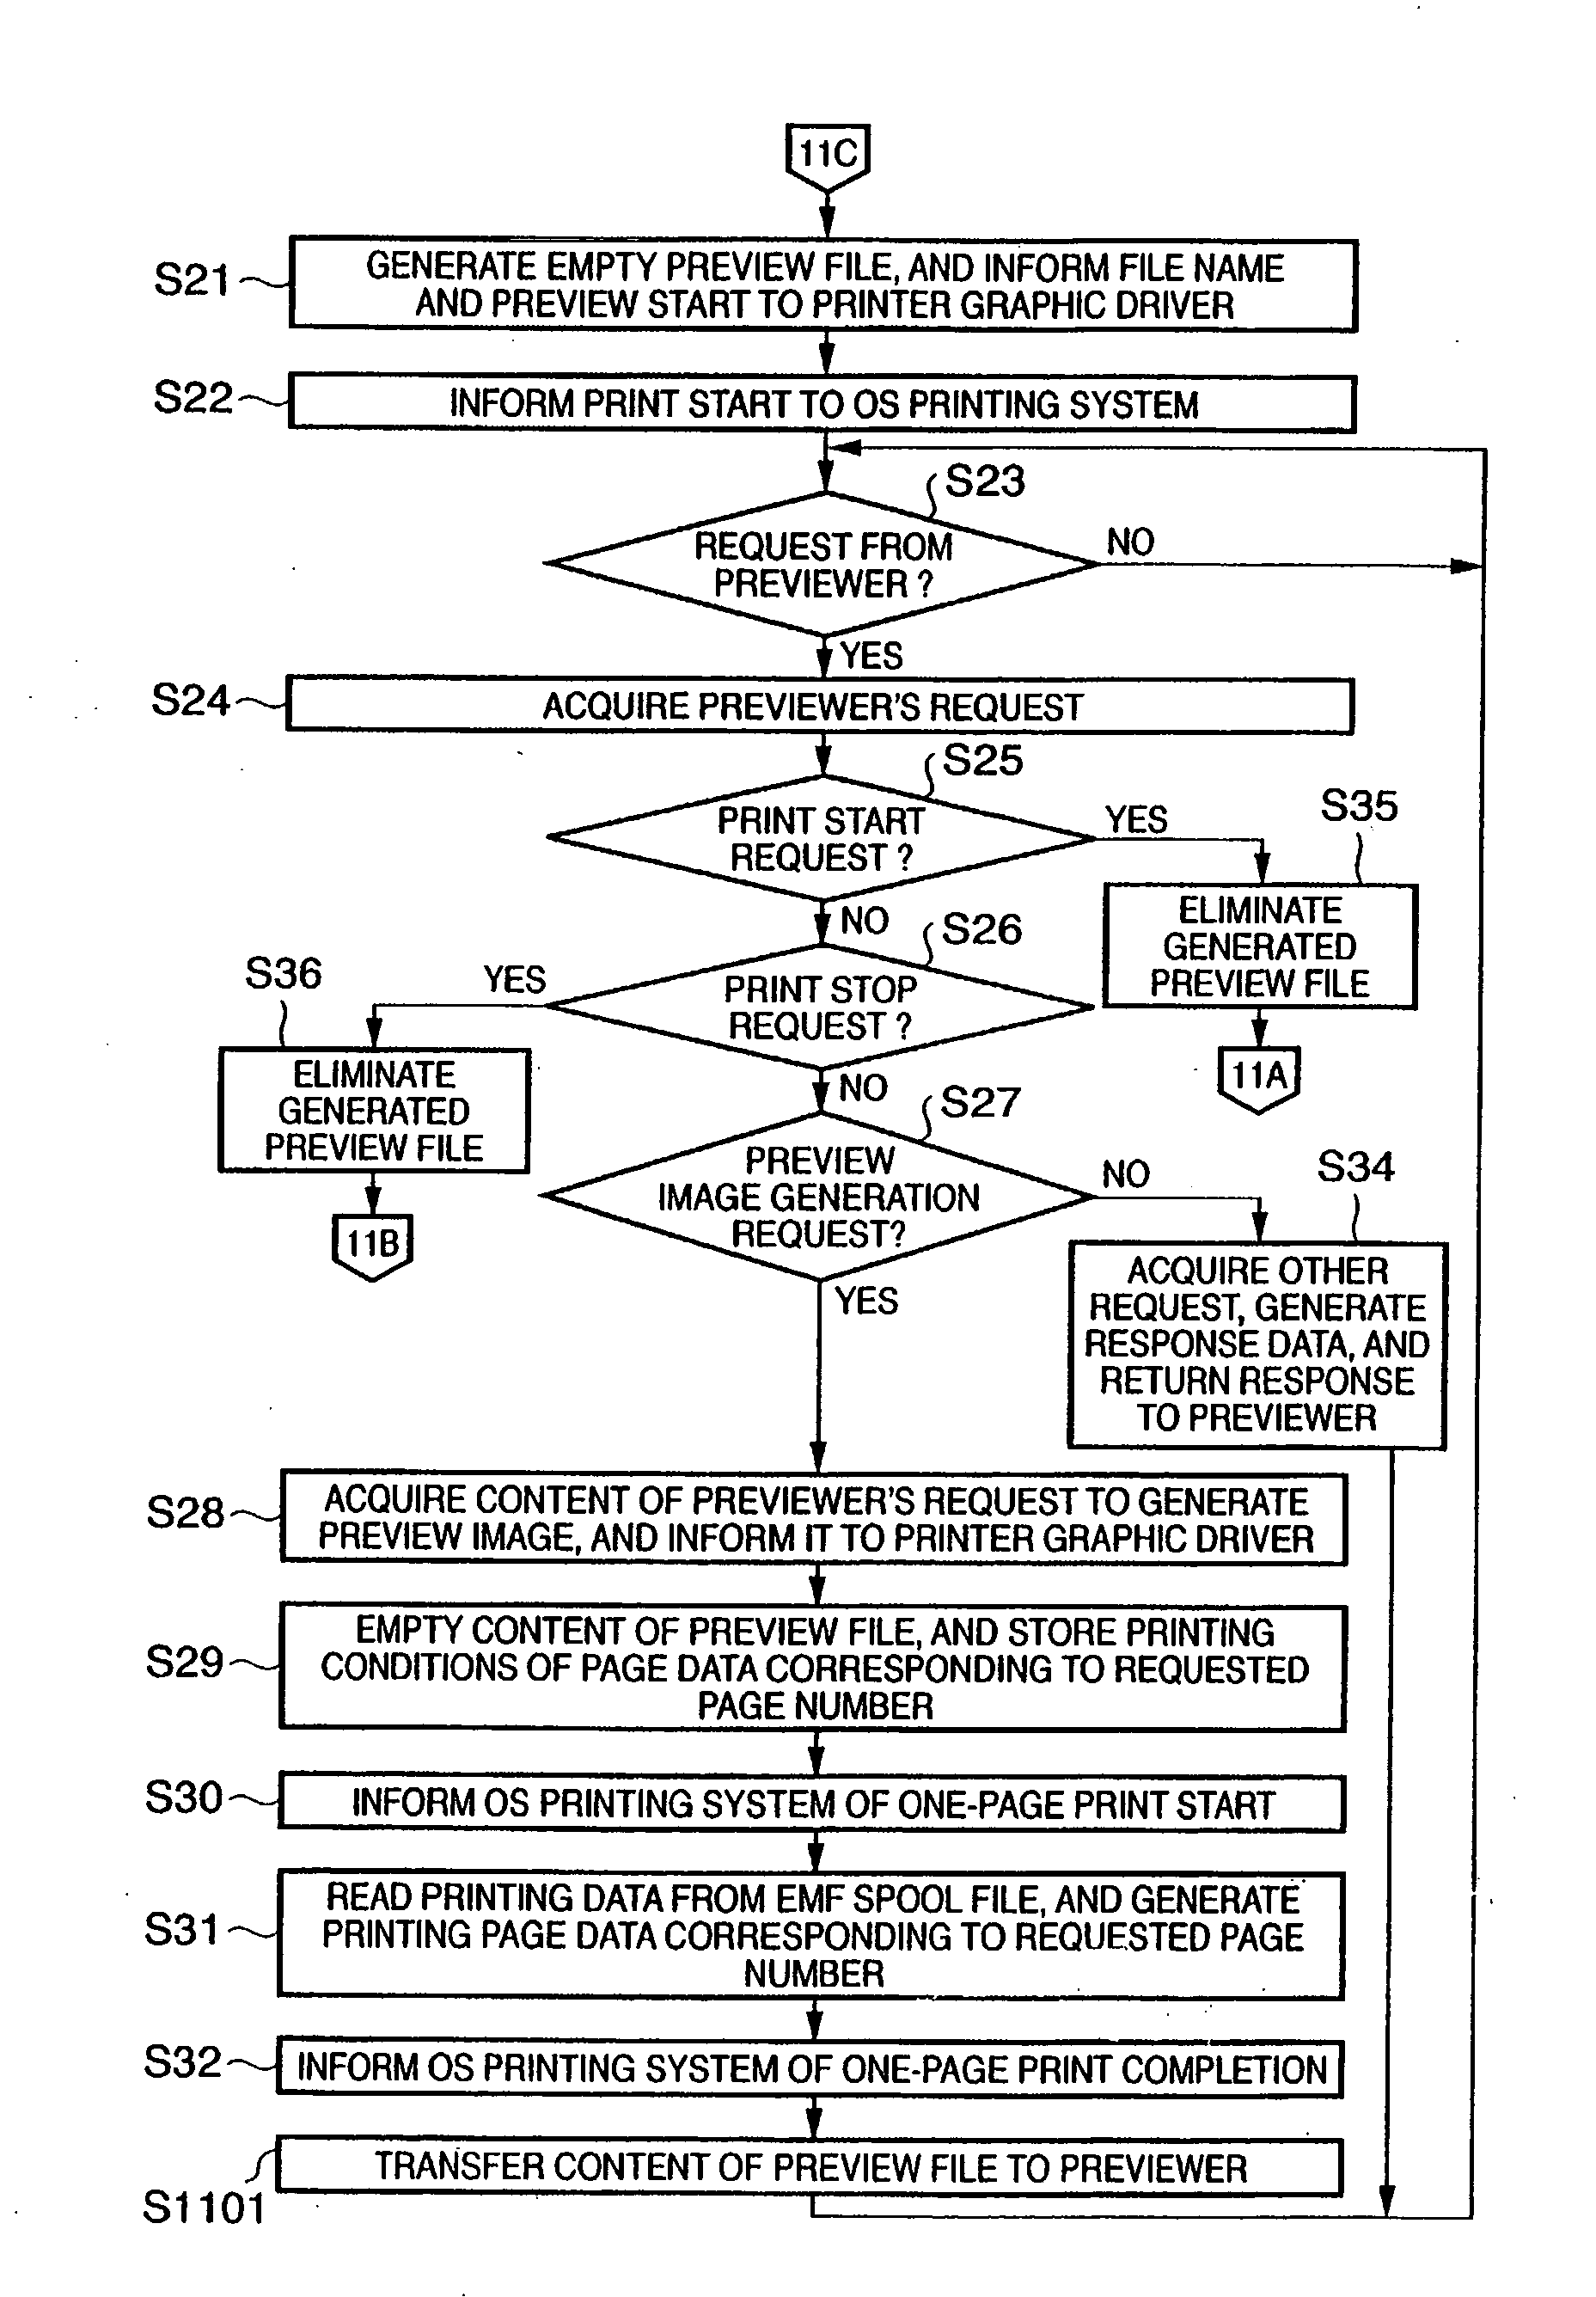 Print control apparatus and method